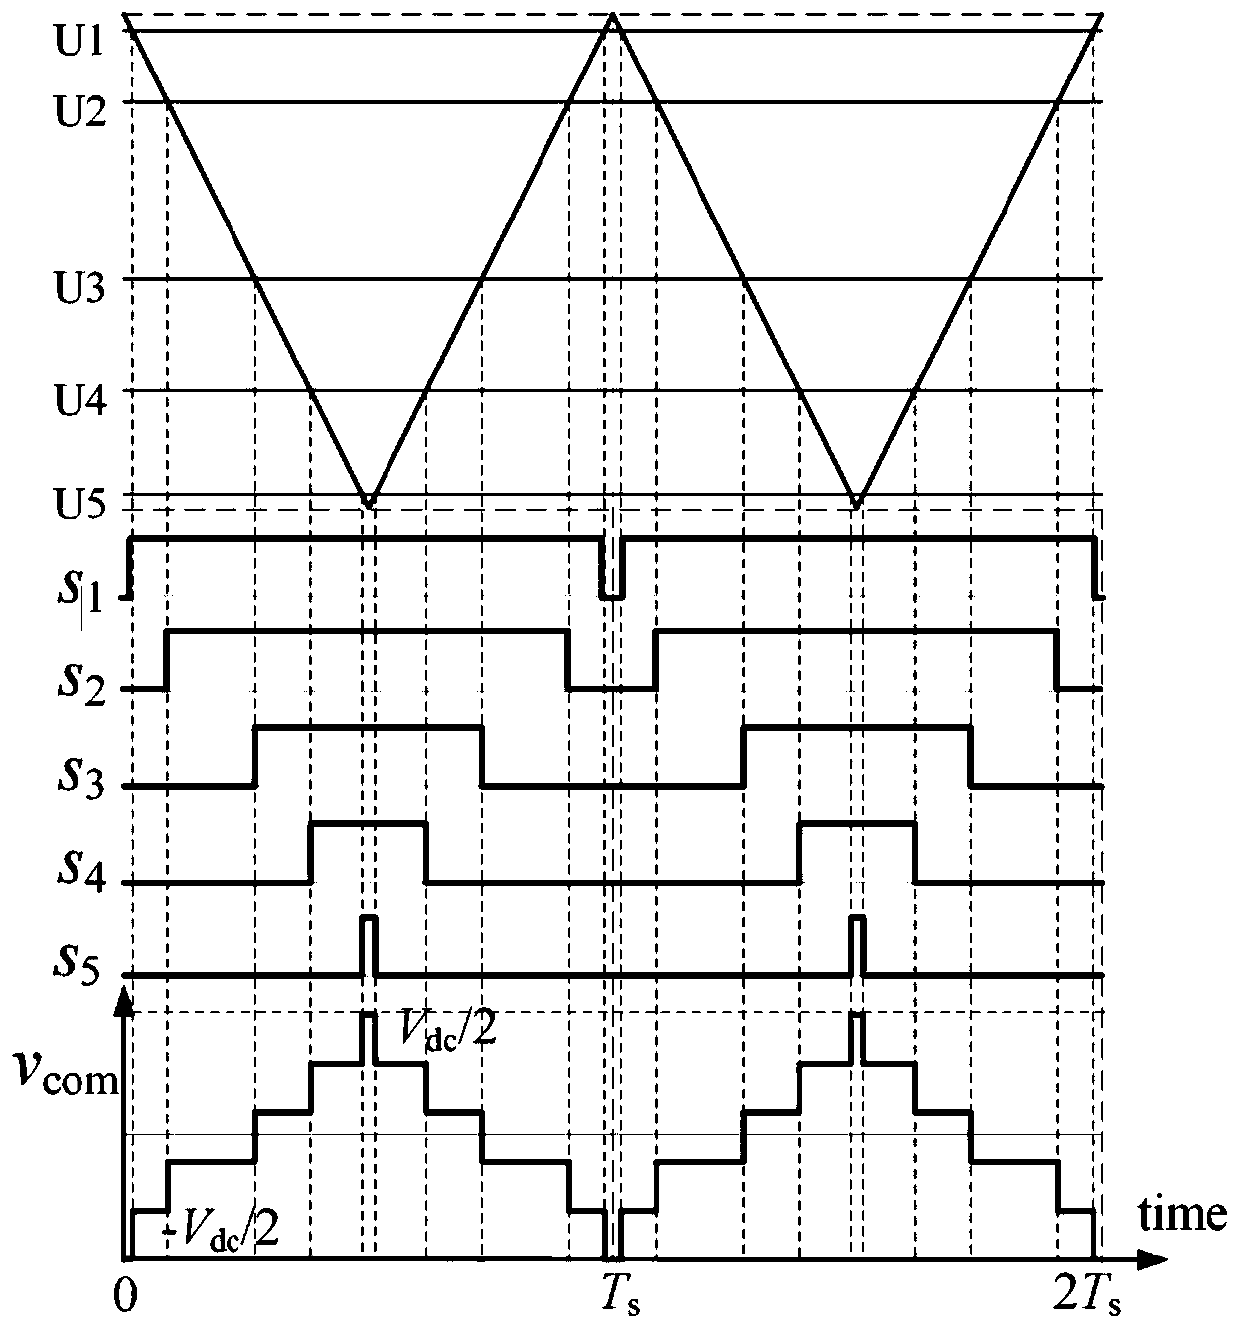 Sawtooth carrier PWM modulation method for symmetric odd phase two-level inverter